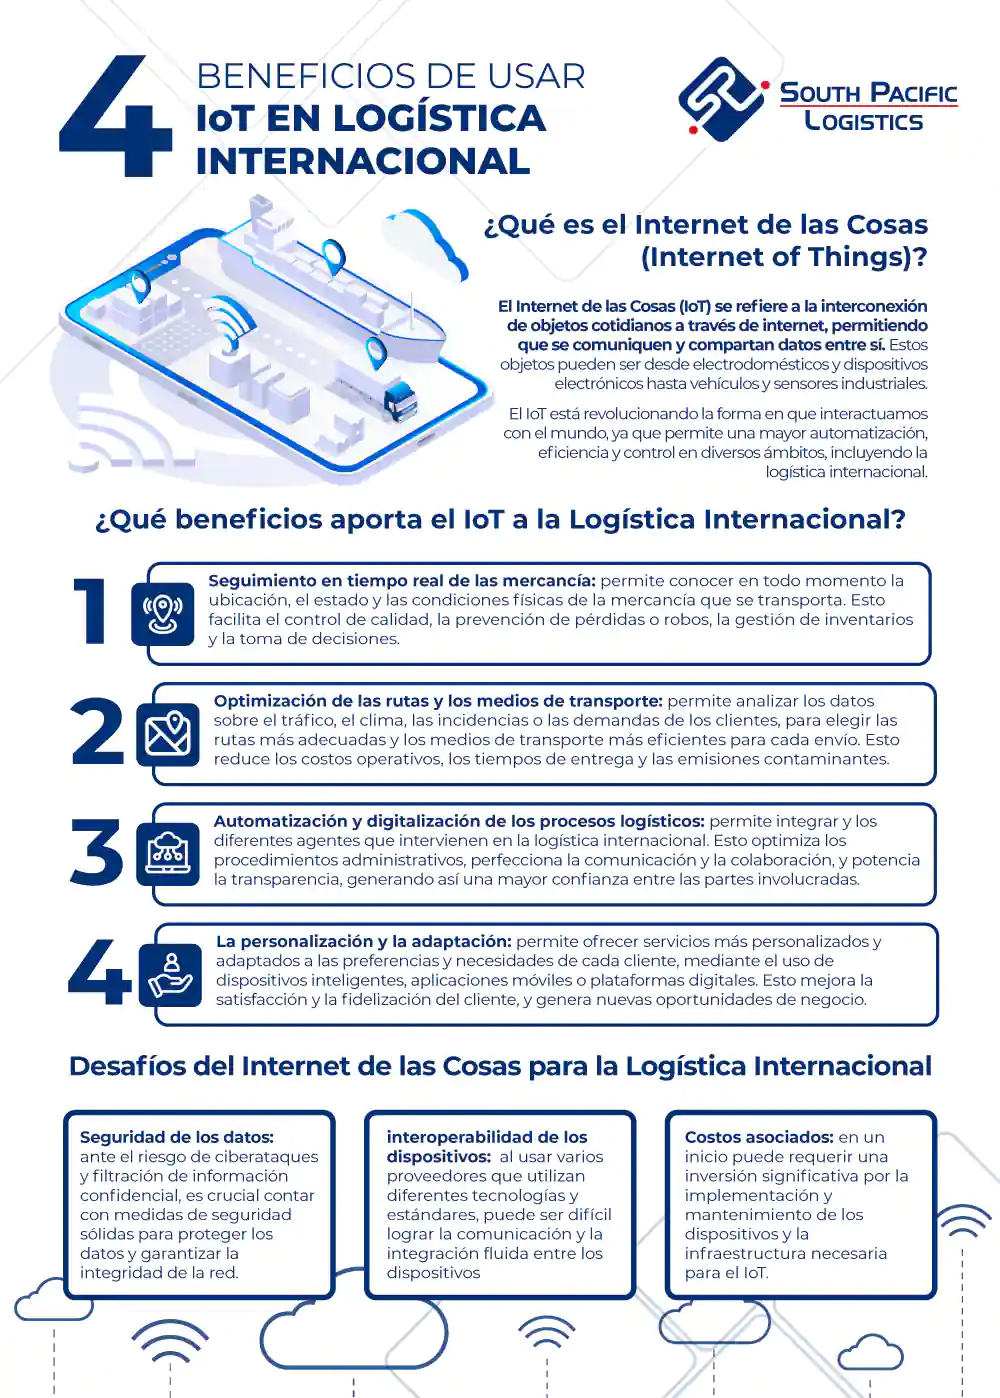 Infografia sobre el Internet de las Cosas (IoT) en la logistica internacional